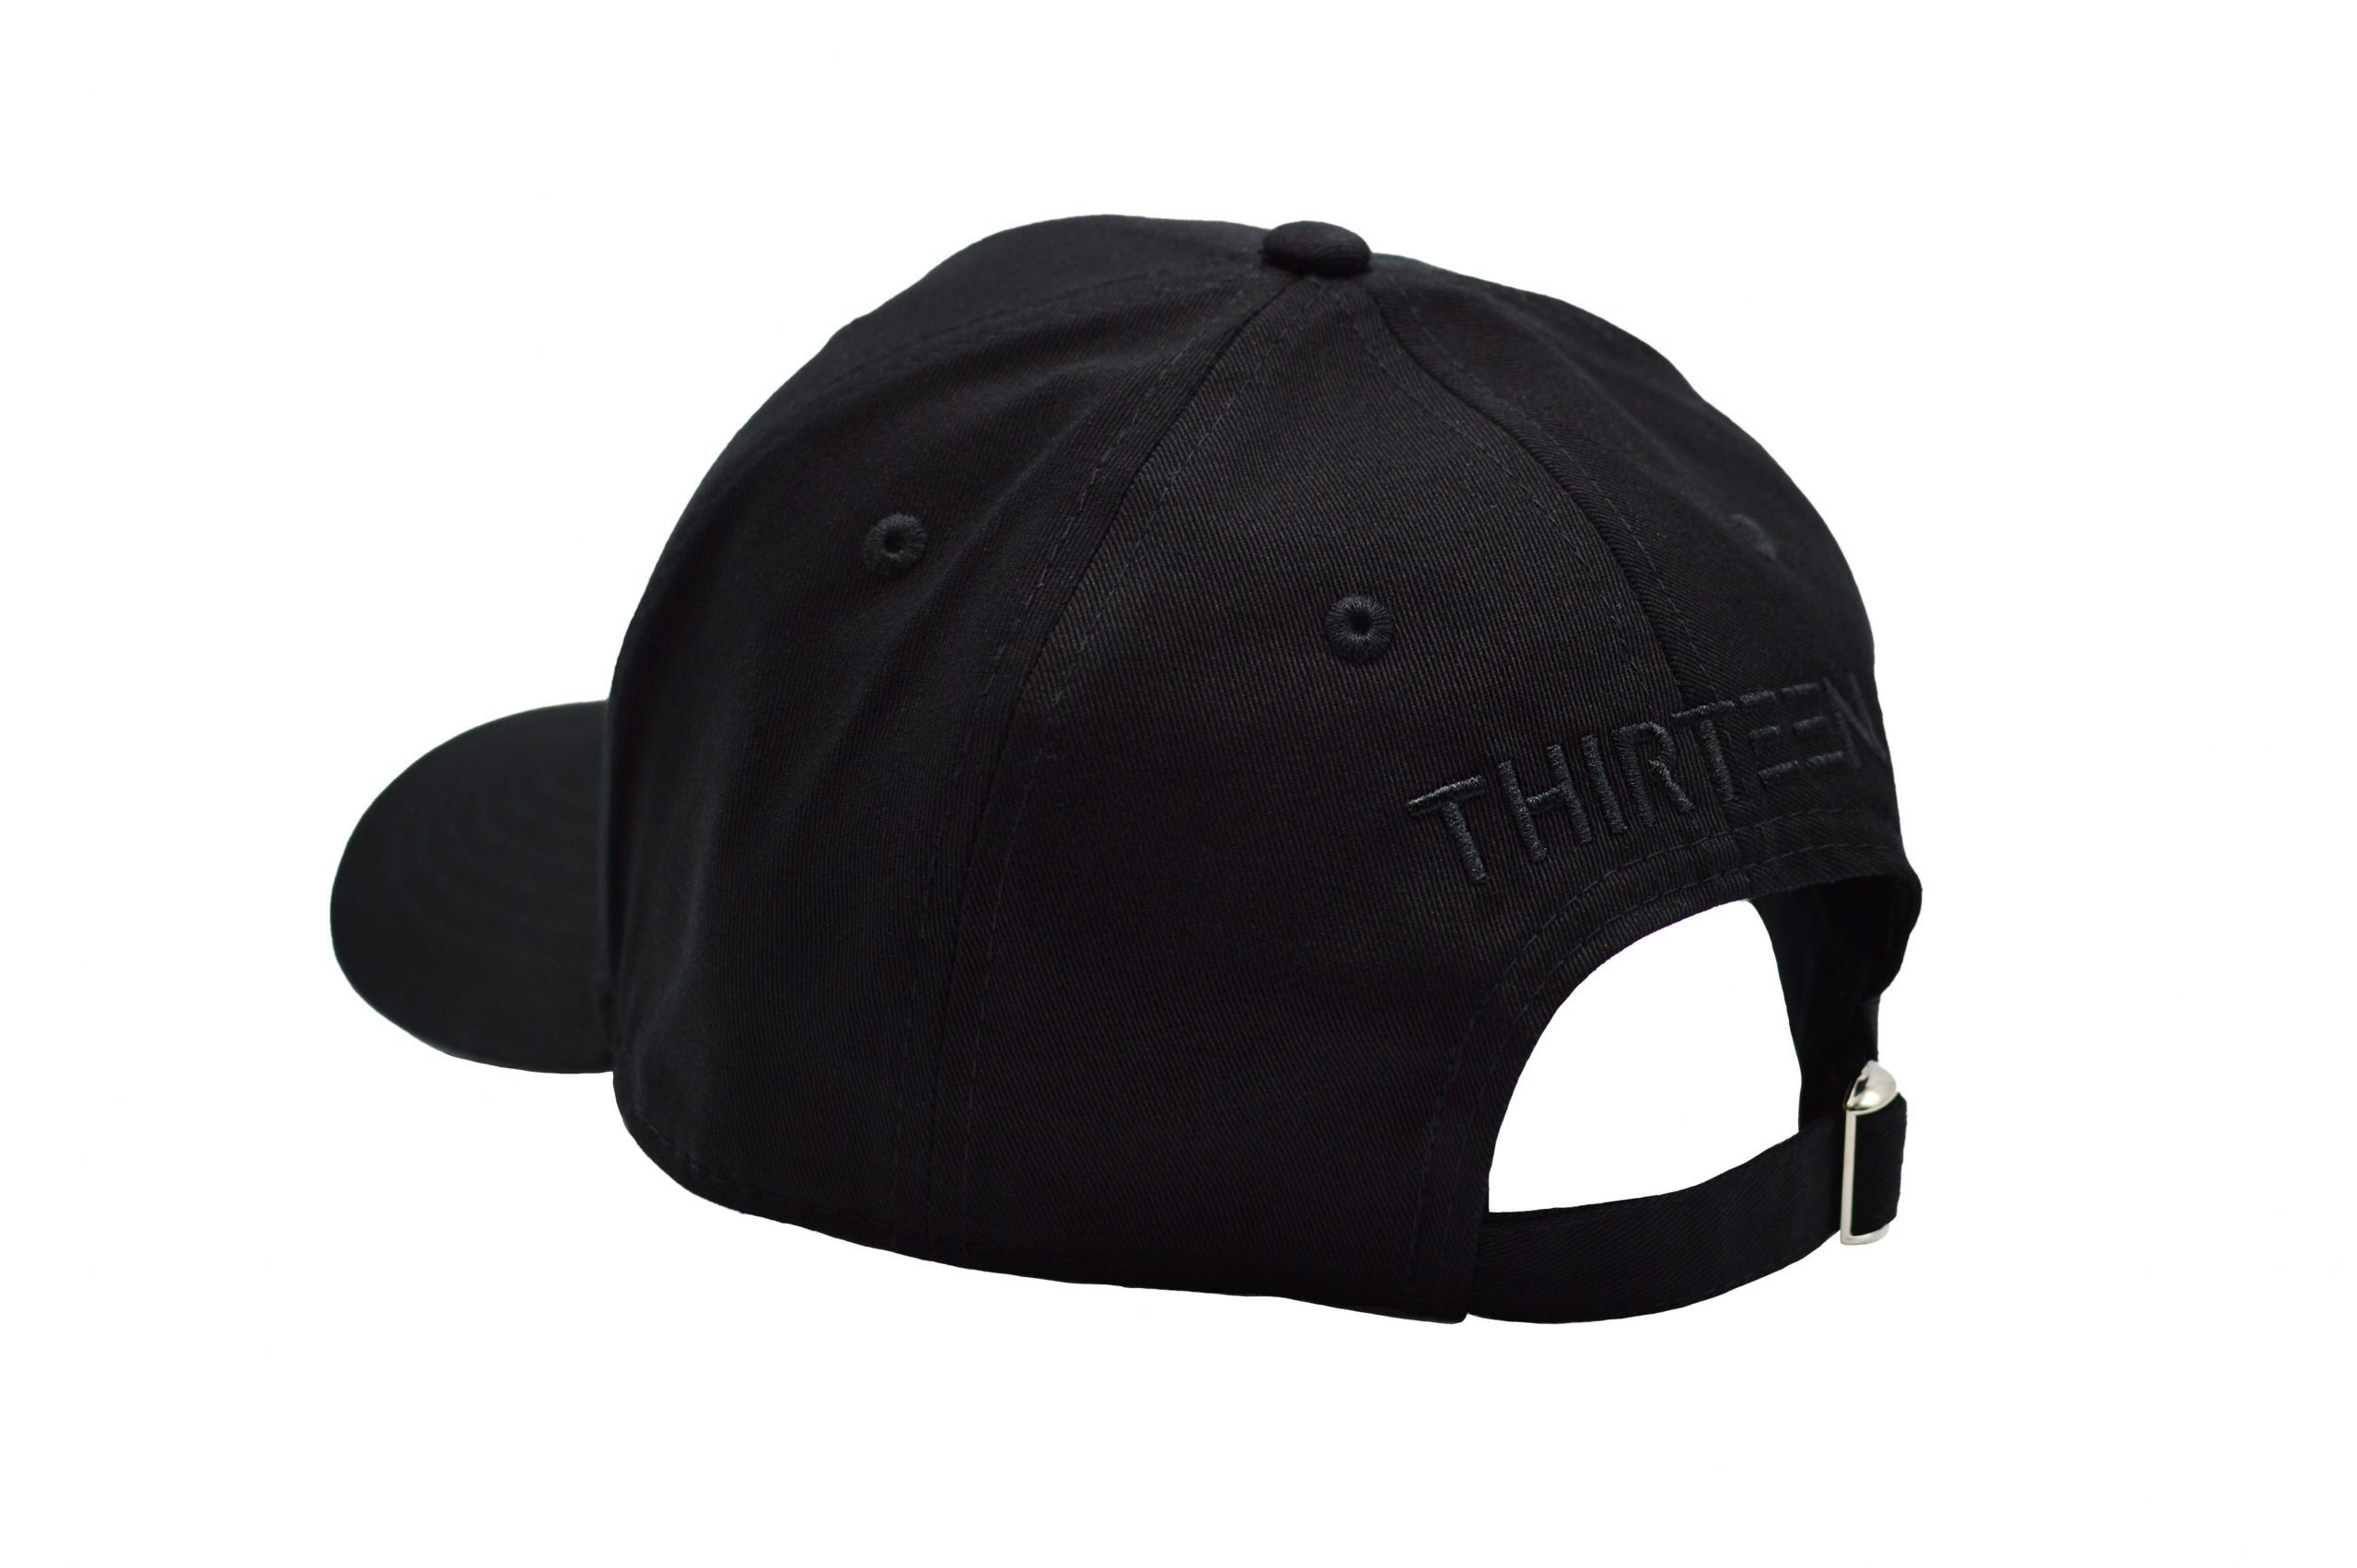 EMPIRE-THIRTEEN Baseball Cap all black "EMPIRE" CAP